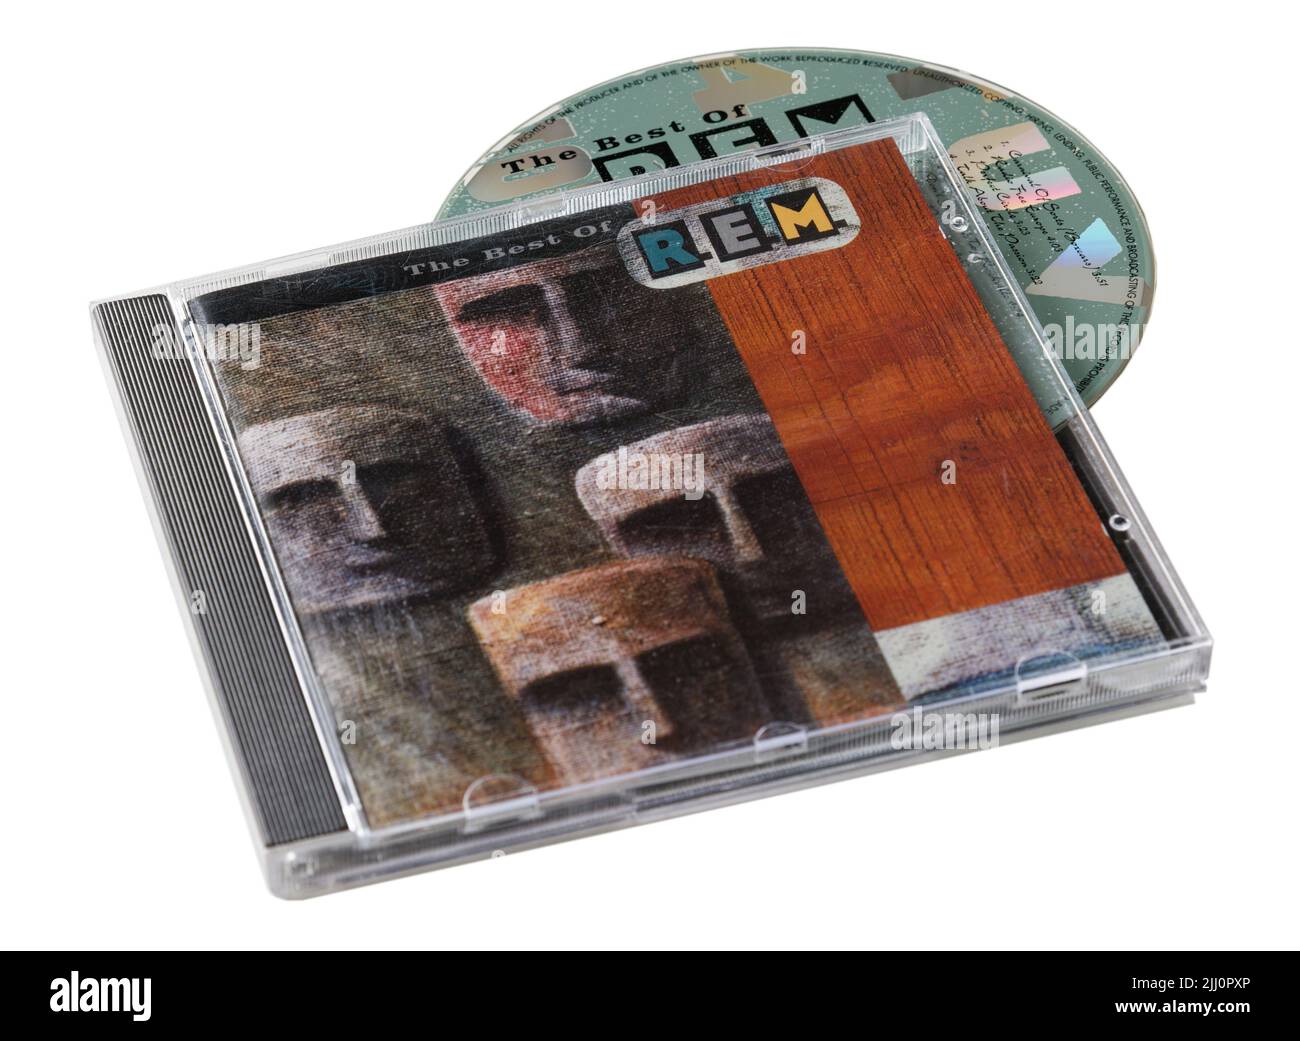 REM Greatest Hits CD Foto stock - Alamy